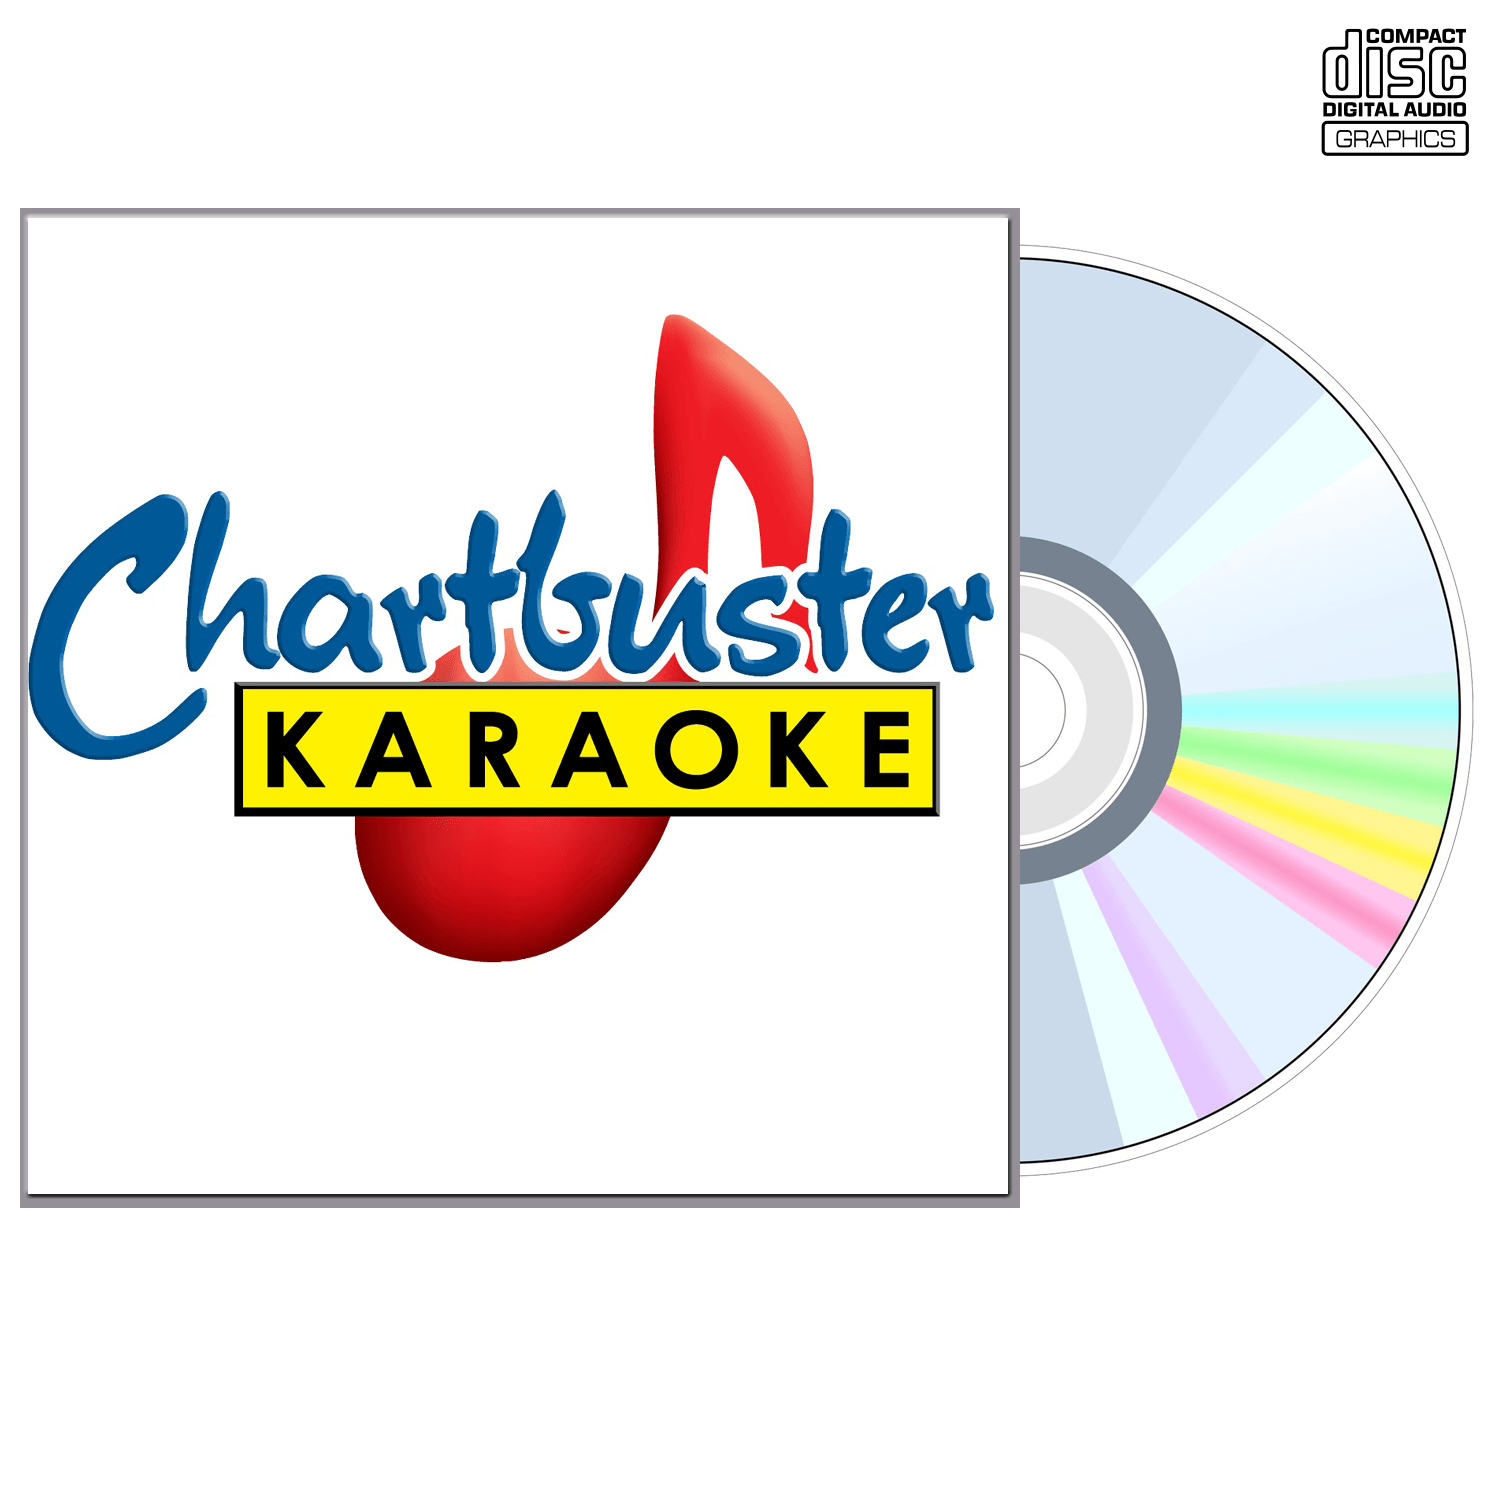 Ultimate 90's Collection V01 - CD+G - Chartbuster Karaoke - Karaoke Home Entertainment